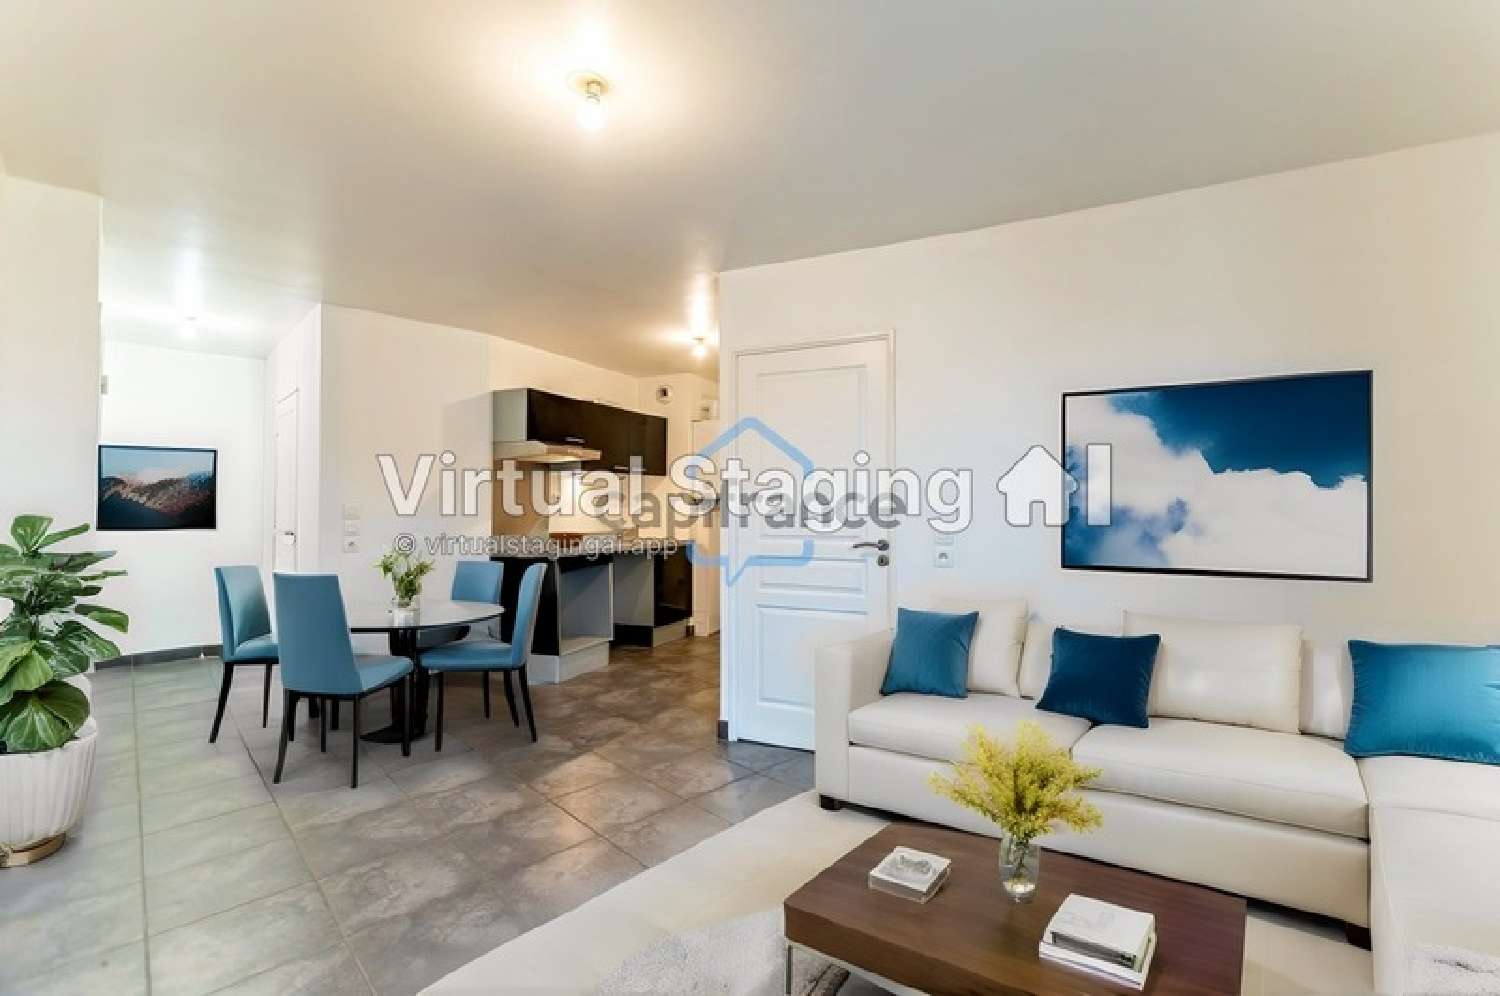  à vendre appartement Villeurbanne Rhône 4